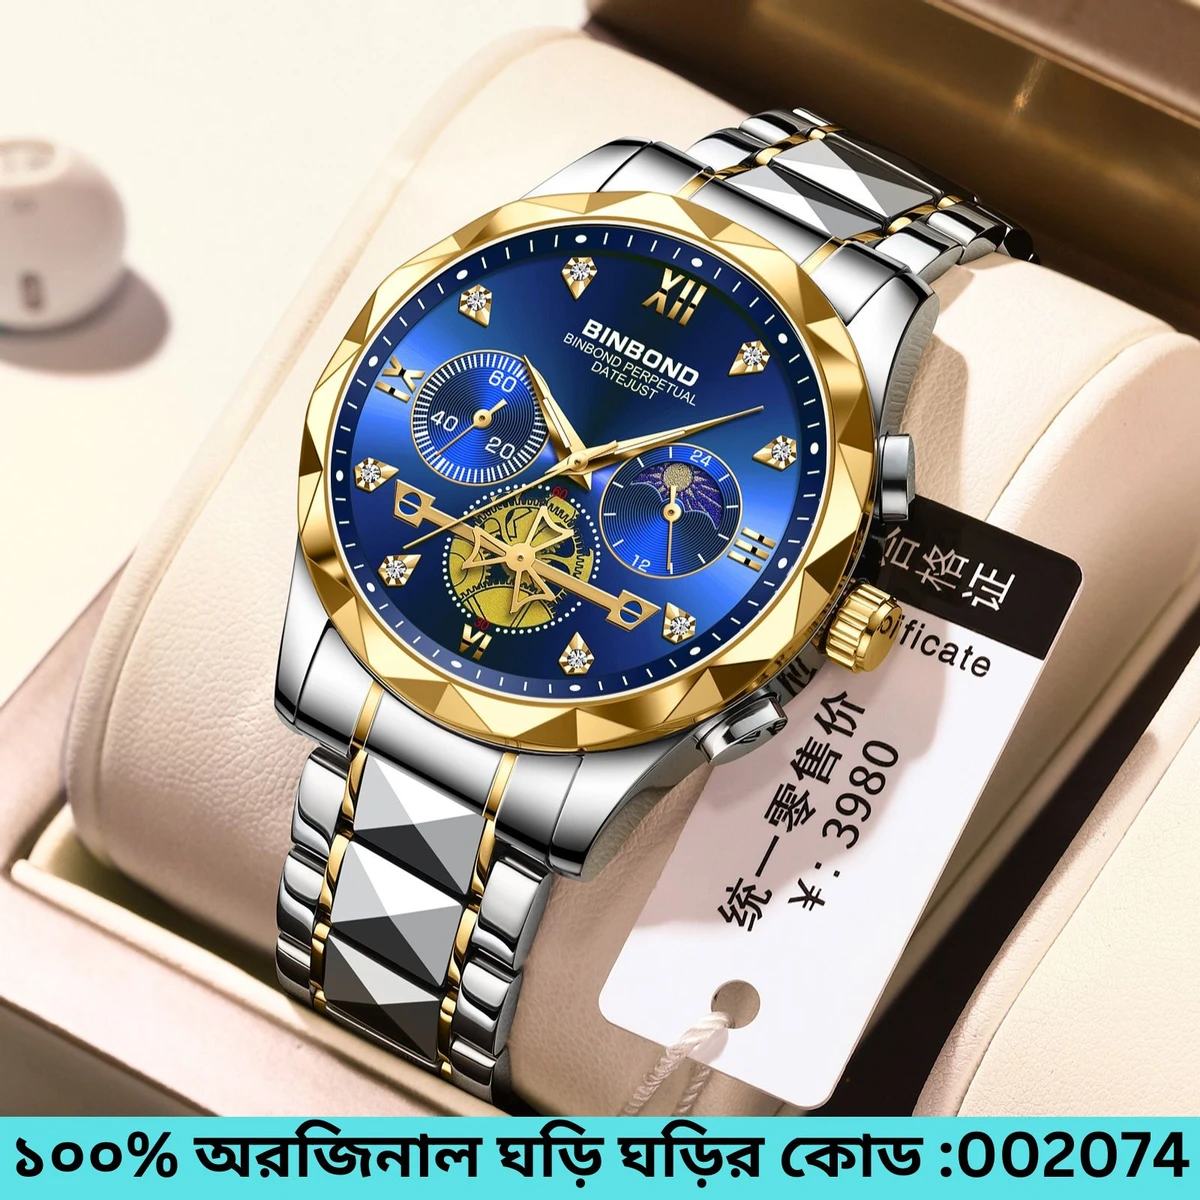 New Luxury Binbond Brand Men's Luminous Watches Stainless Steel Waterproof BINBOND Chronograph watch TOTON AR DIAL BLUE COOLER WATCH MAN